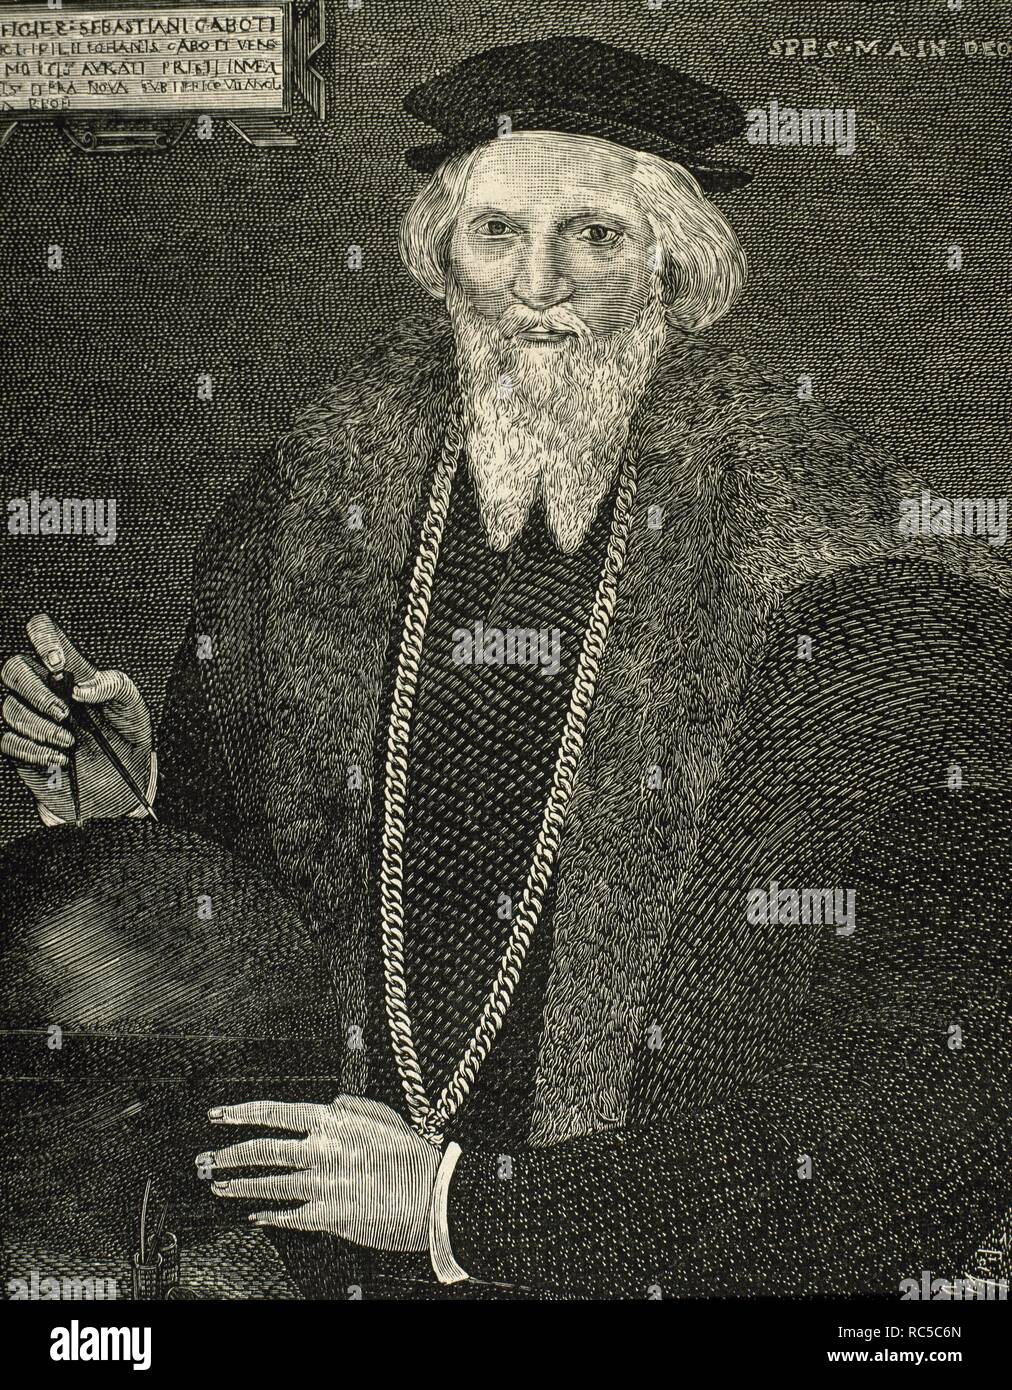 Sebastian Cabot (c. 1474-c. 1557). Italian explorer. Portrait. Engraving by Capuz. Stock Photo